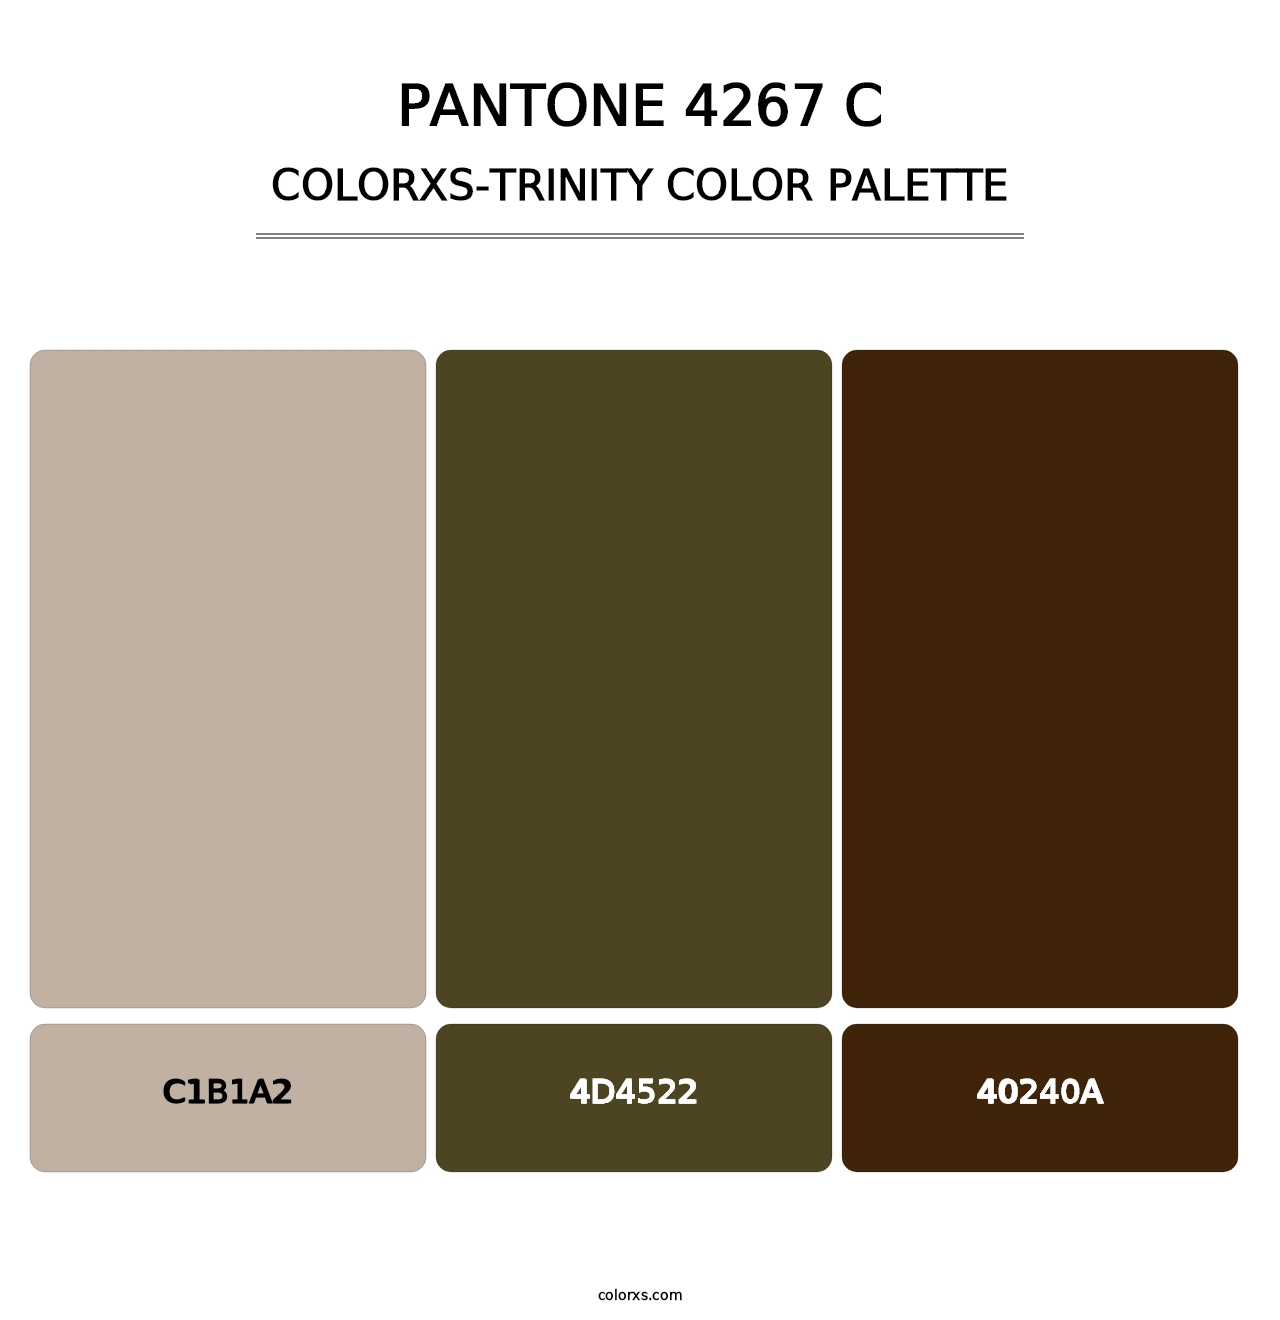 PANTONE 4267 C - Colorxs Trinity Palette